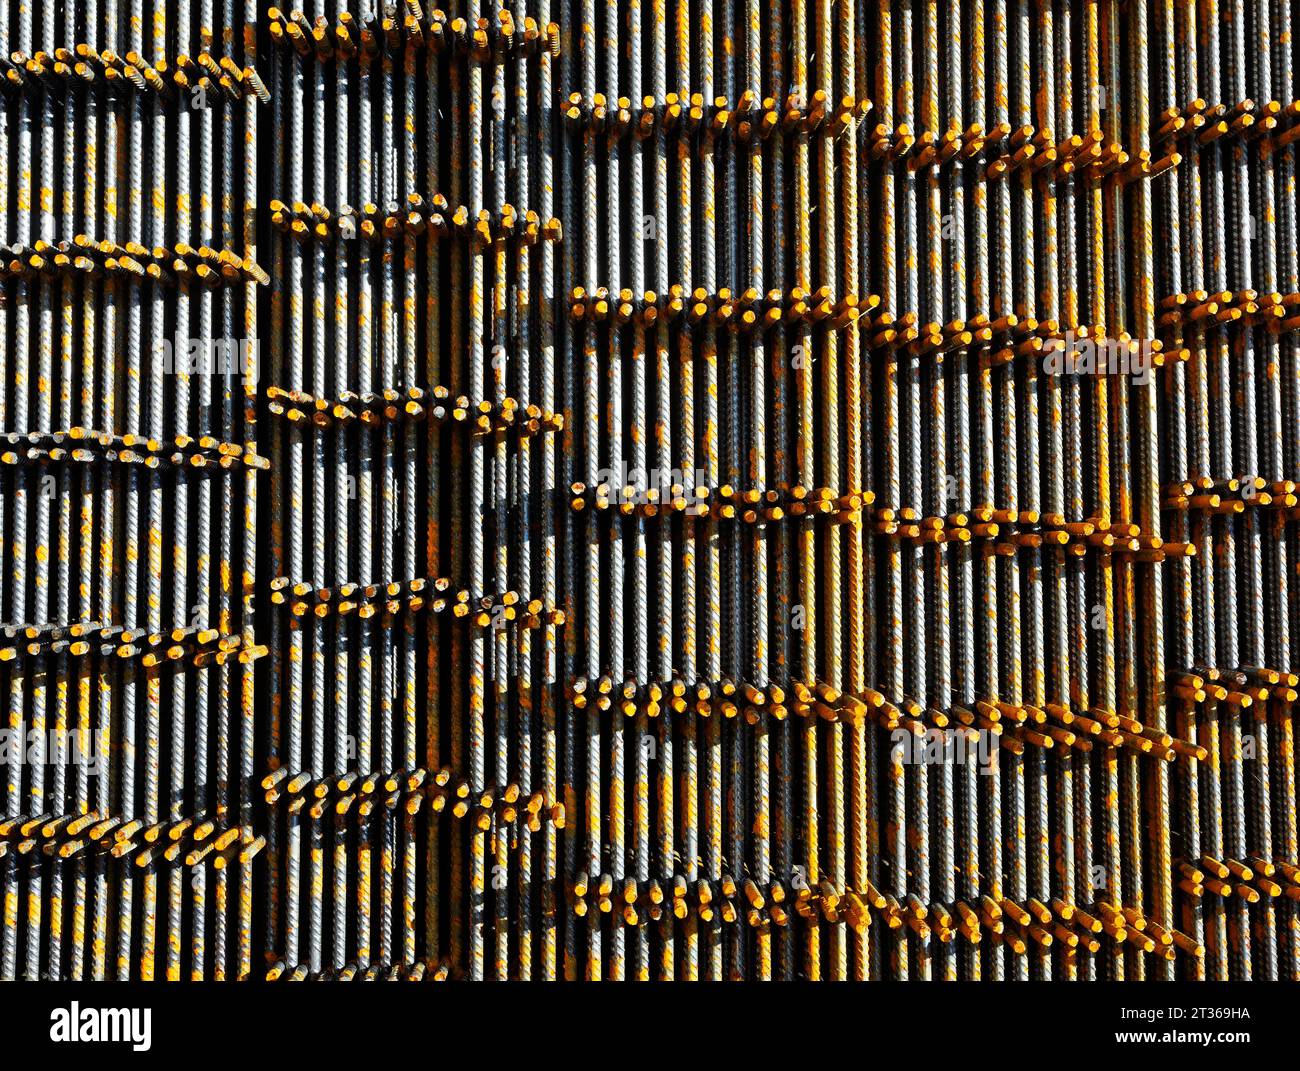 Stacks of industrial steel grids Stock Photo